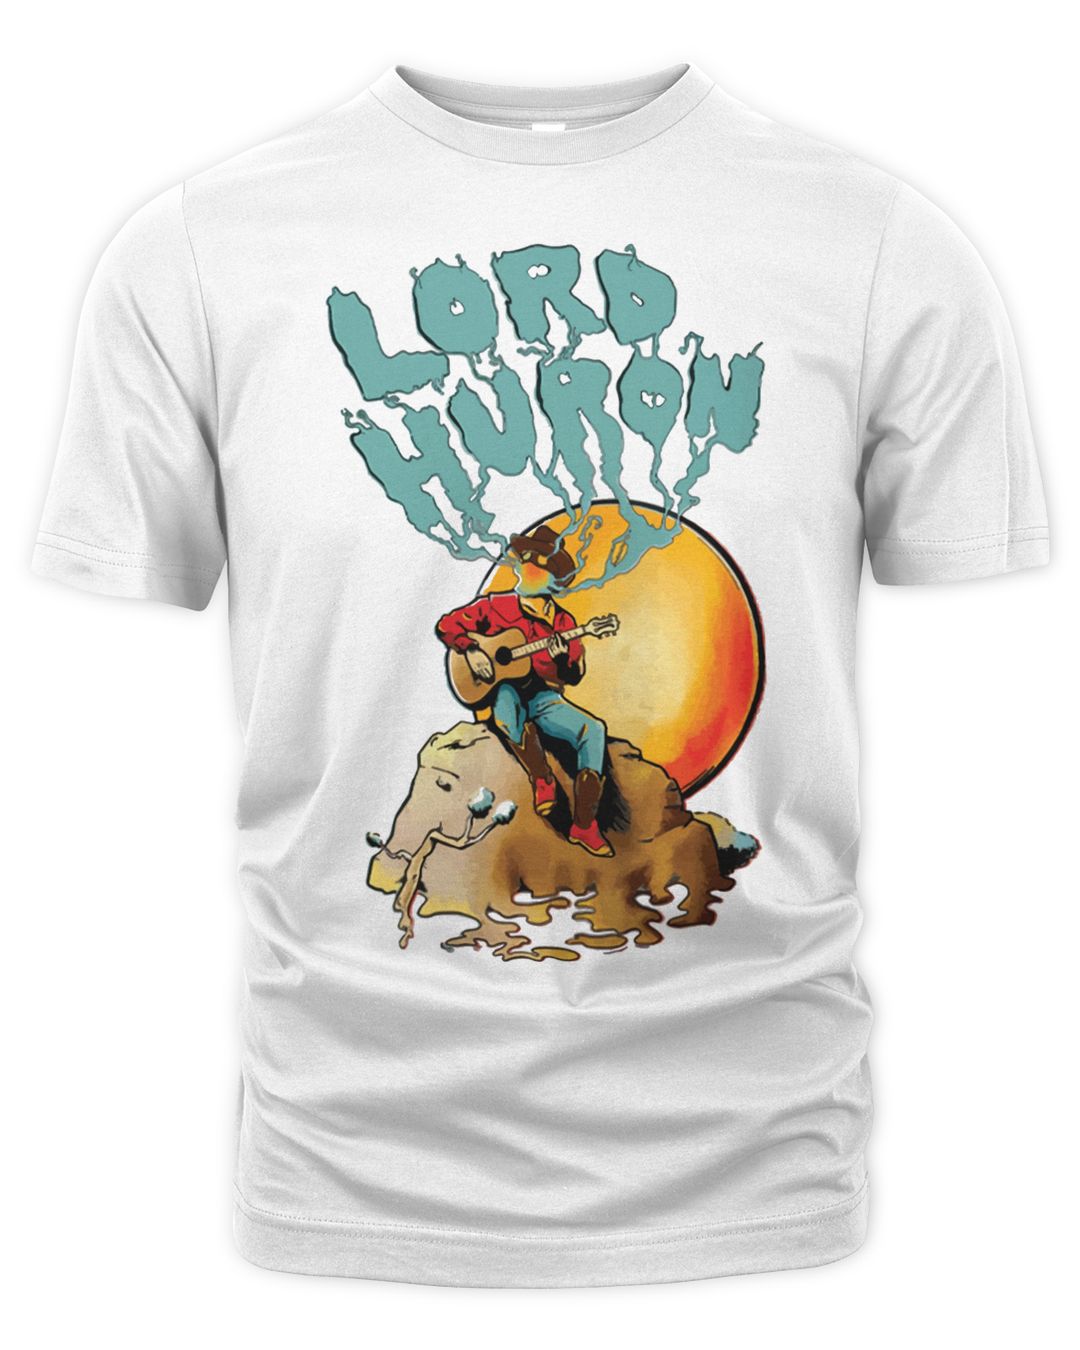 Lord Huron Merch Desert Cowboy 2021 Tour Shirt